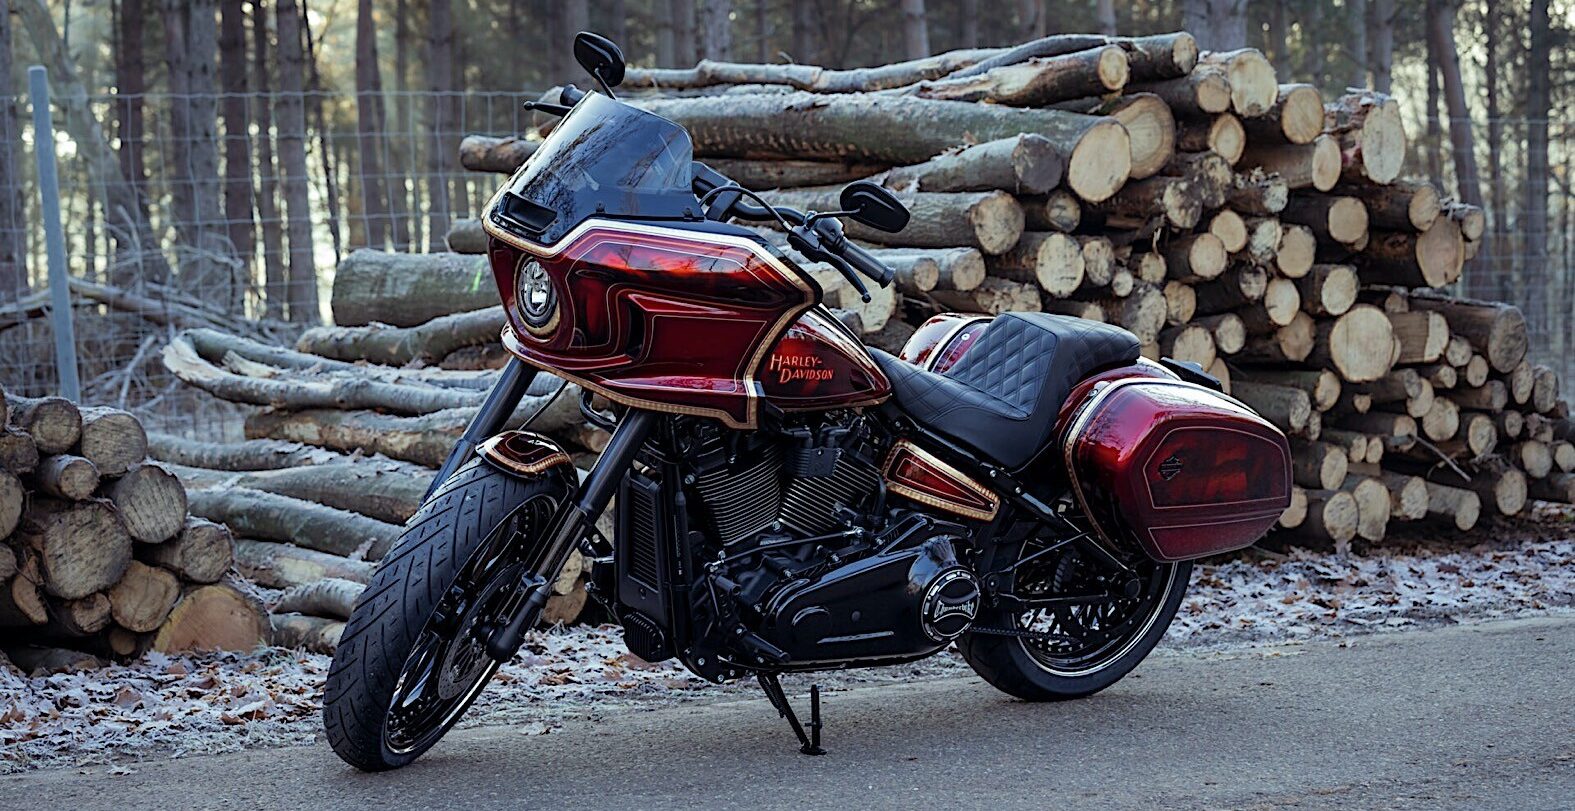 Harley-Davidson Red Rush богато украшен и впечатляет, прям как римский солдат когда-то